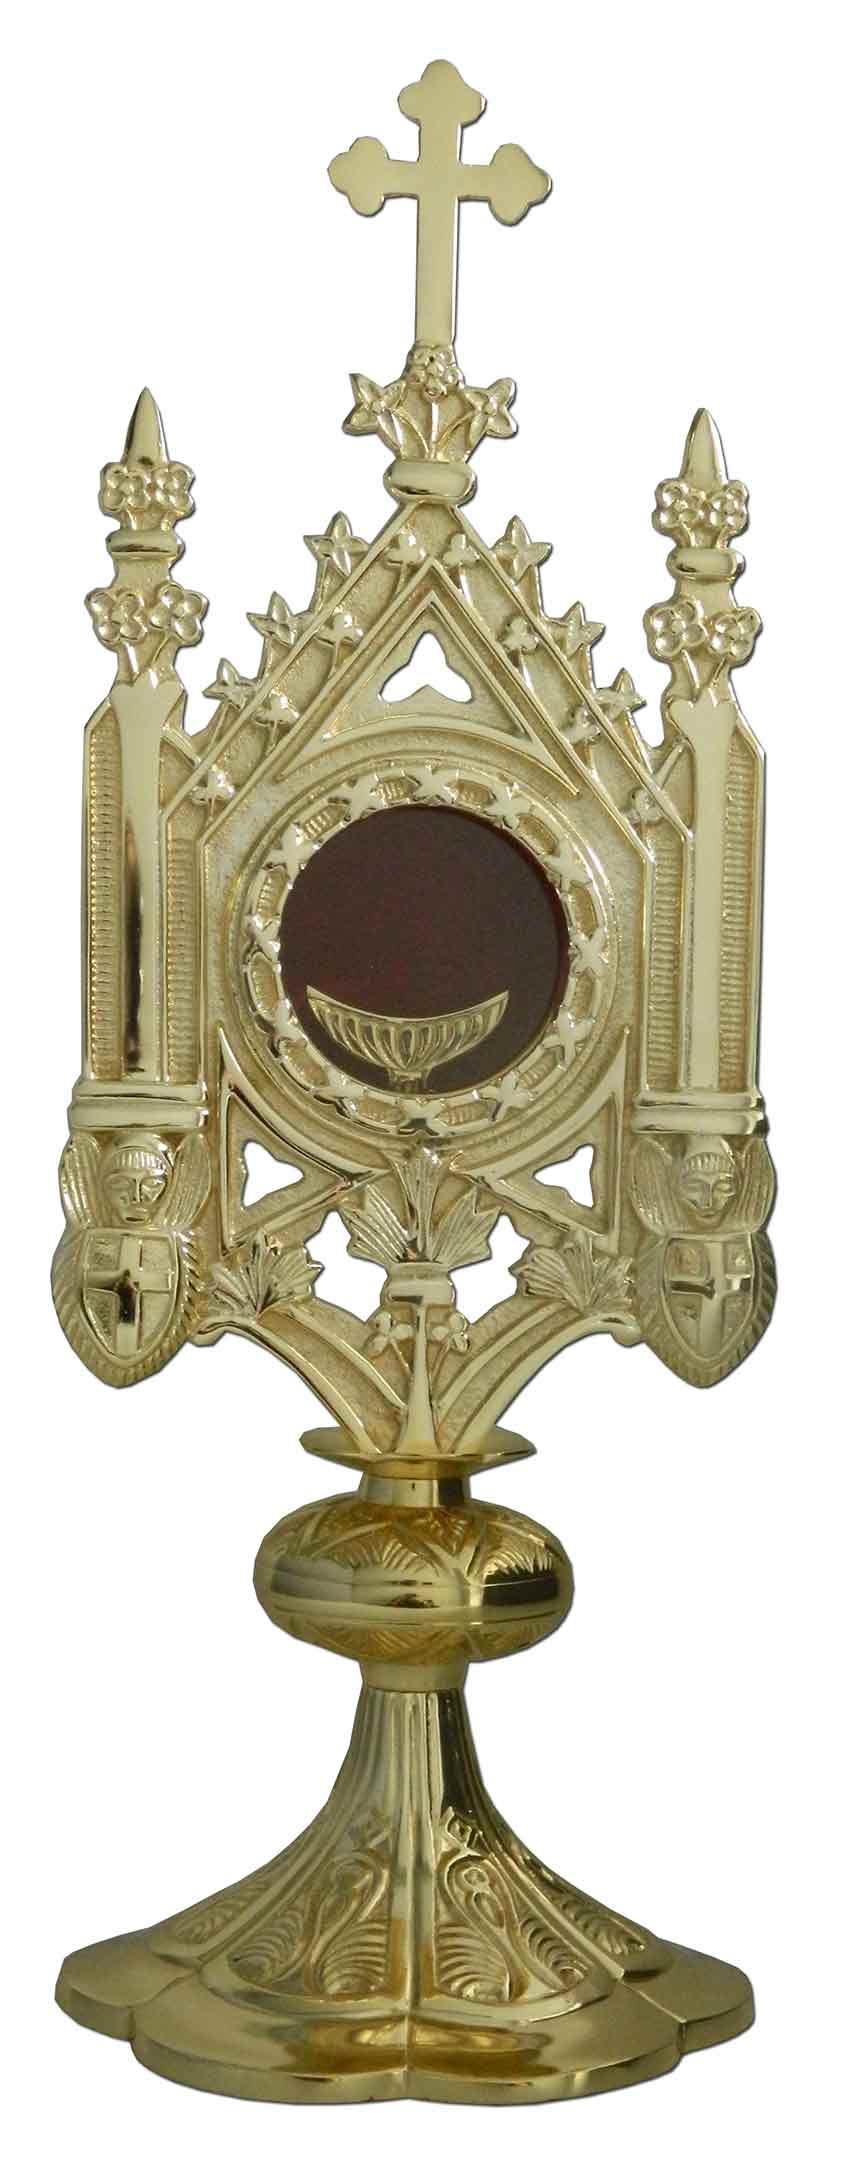 Custodia gótica fabricada en bronce